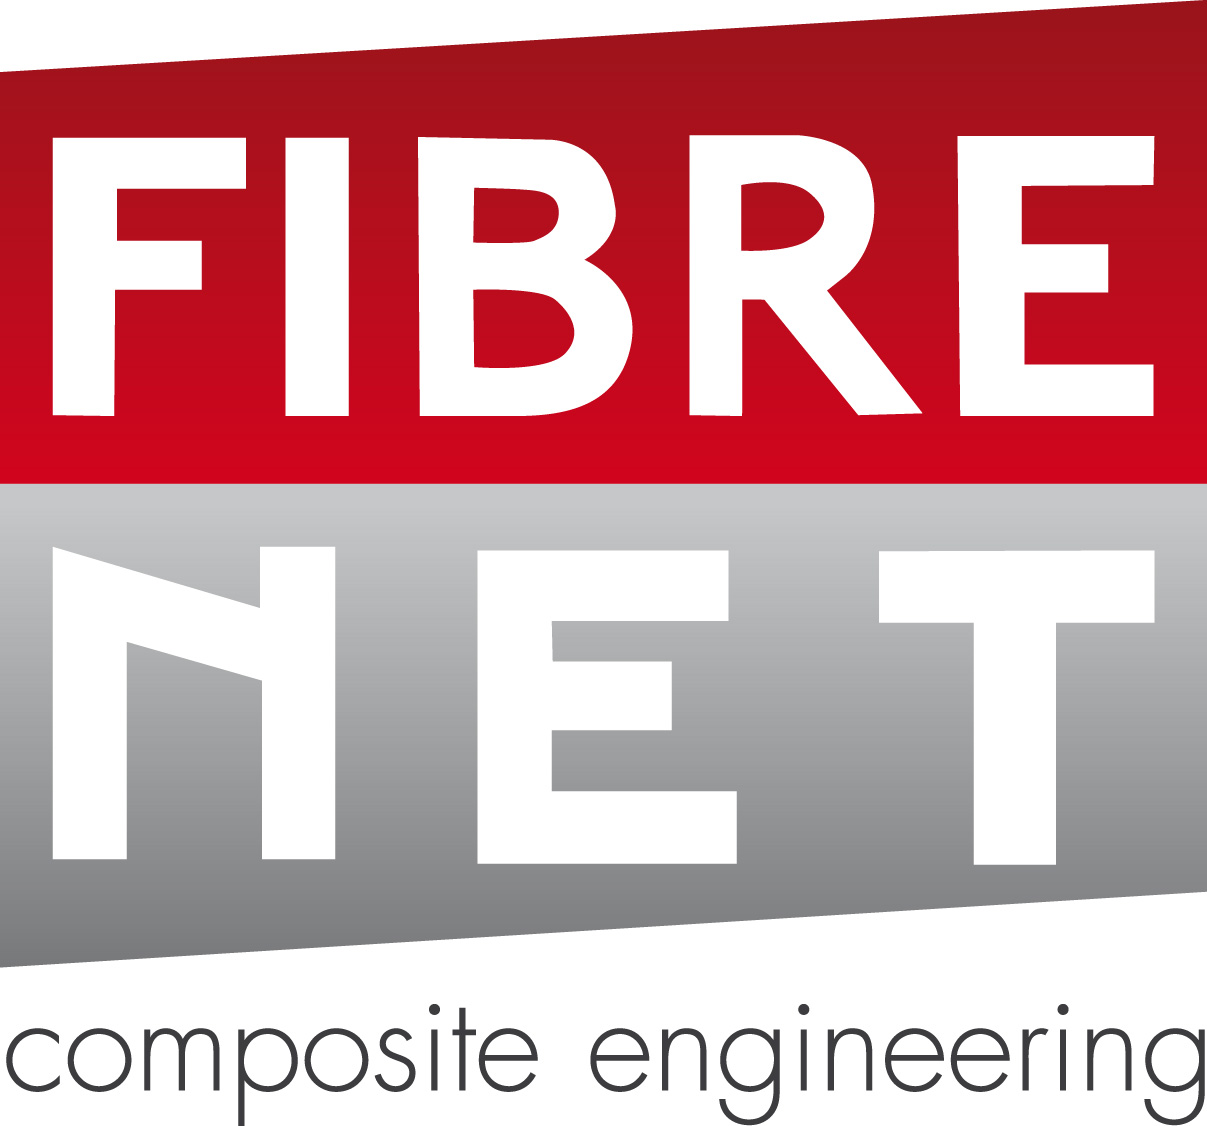 logo Fibrenet